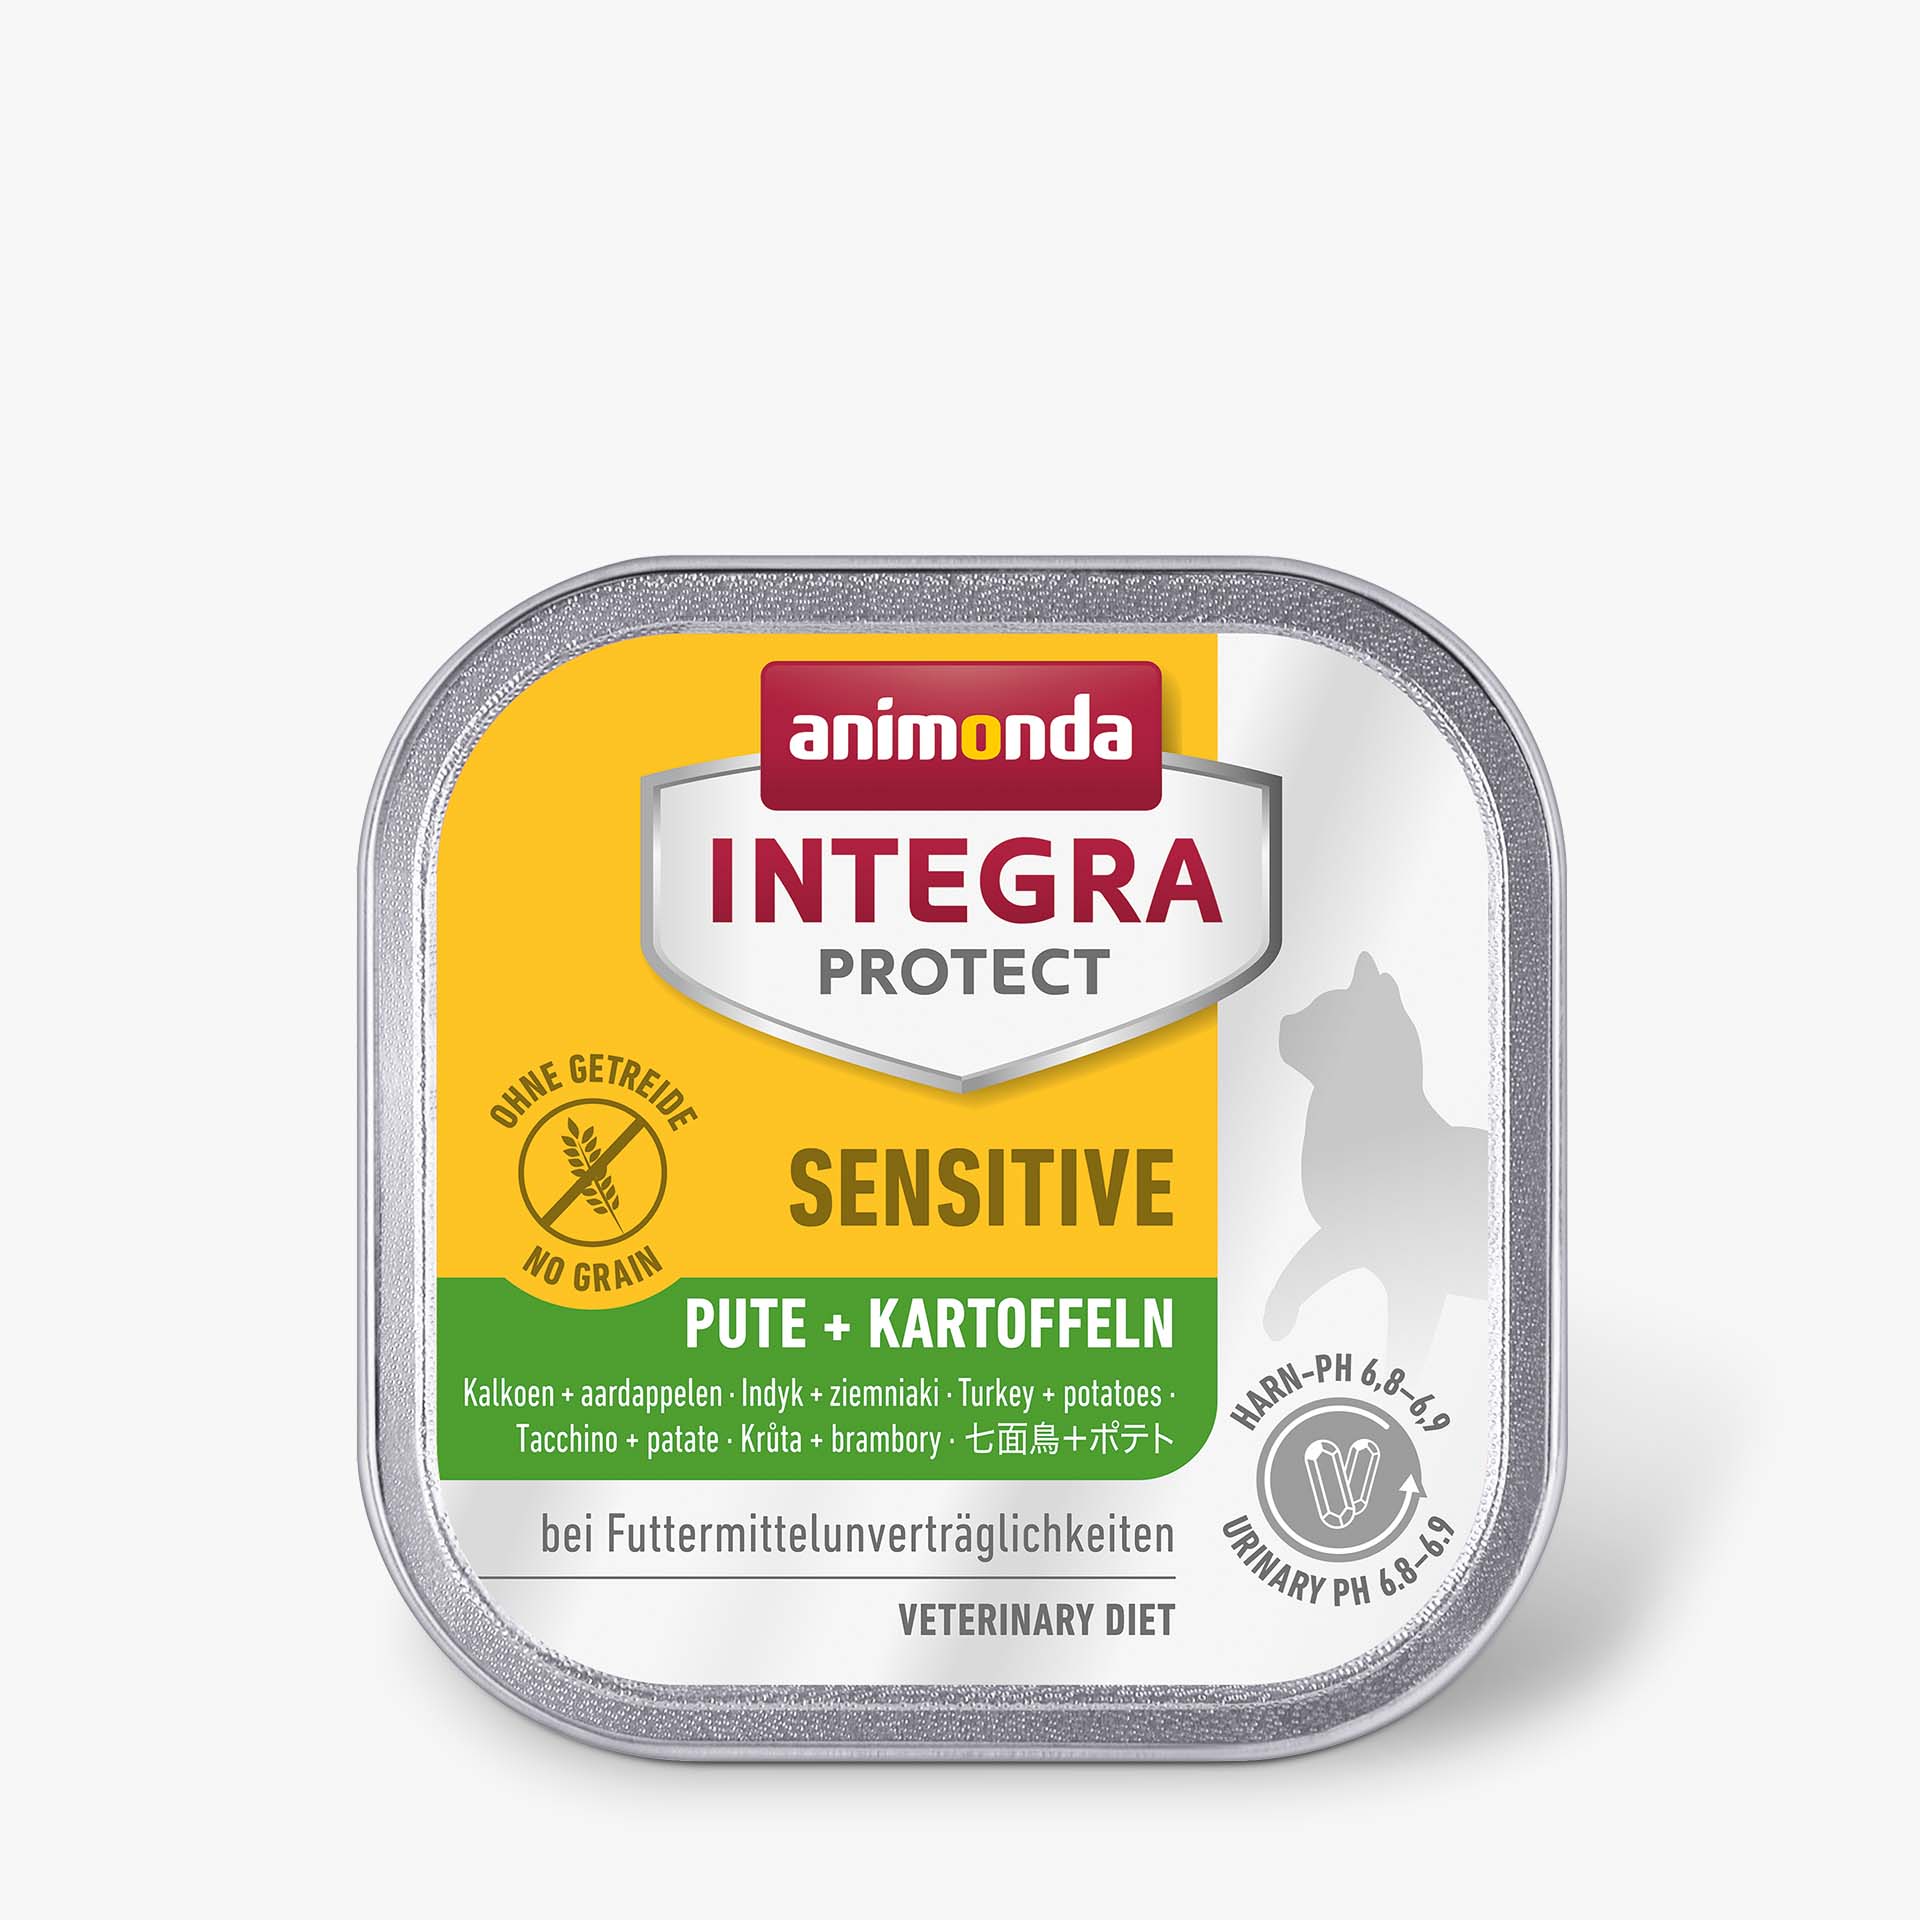 INTEGRA PROTECT Turkey + potatoes Sensitive